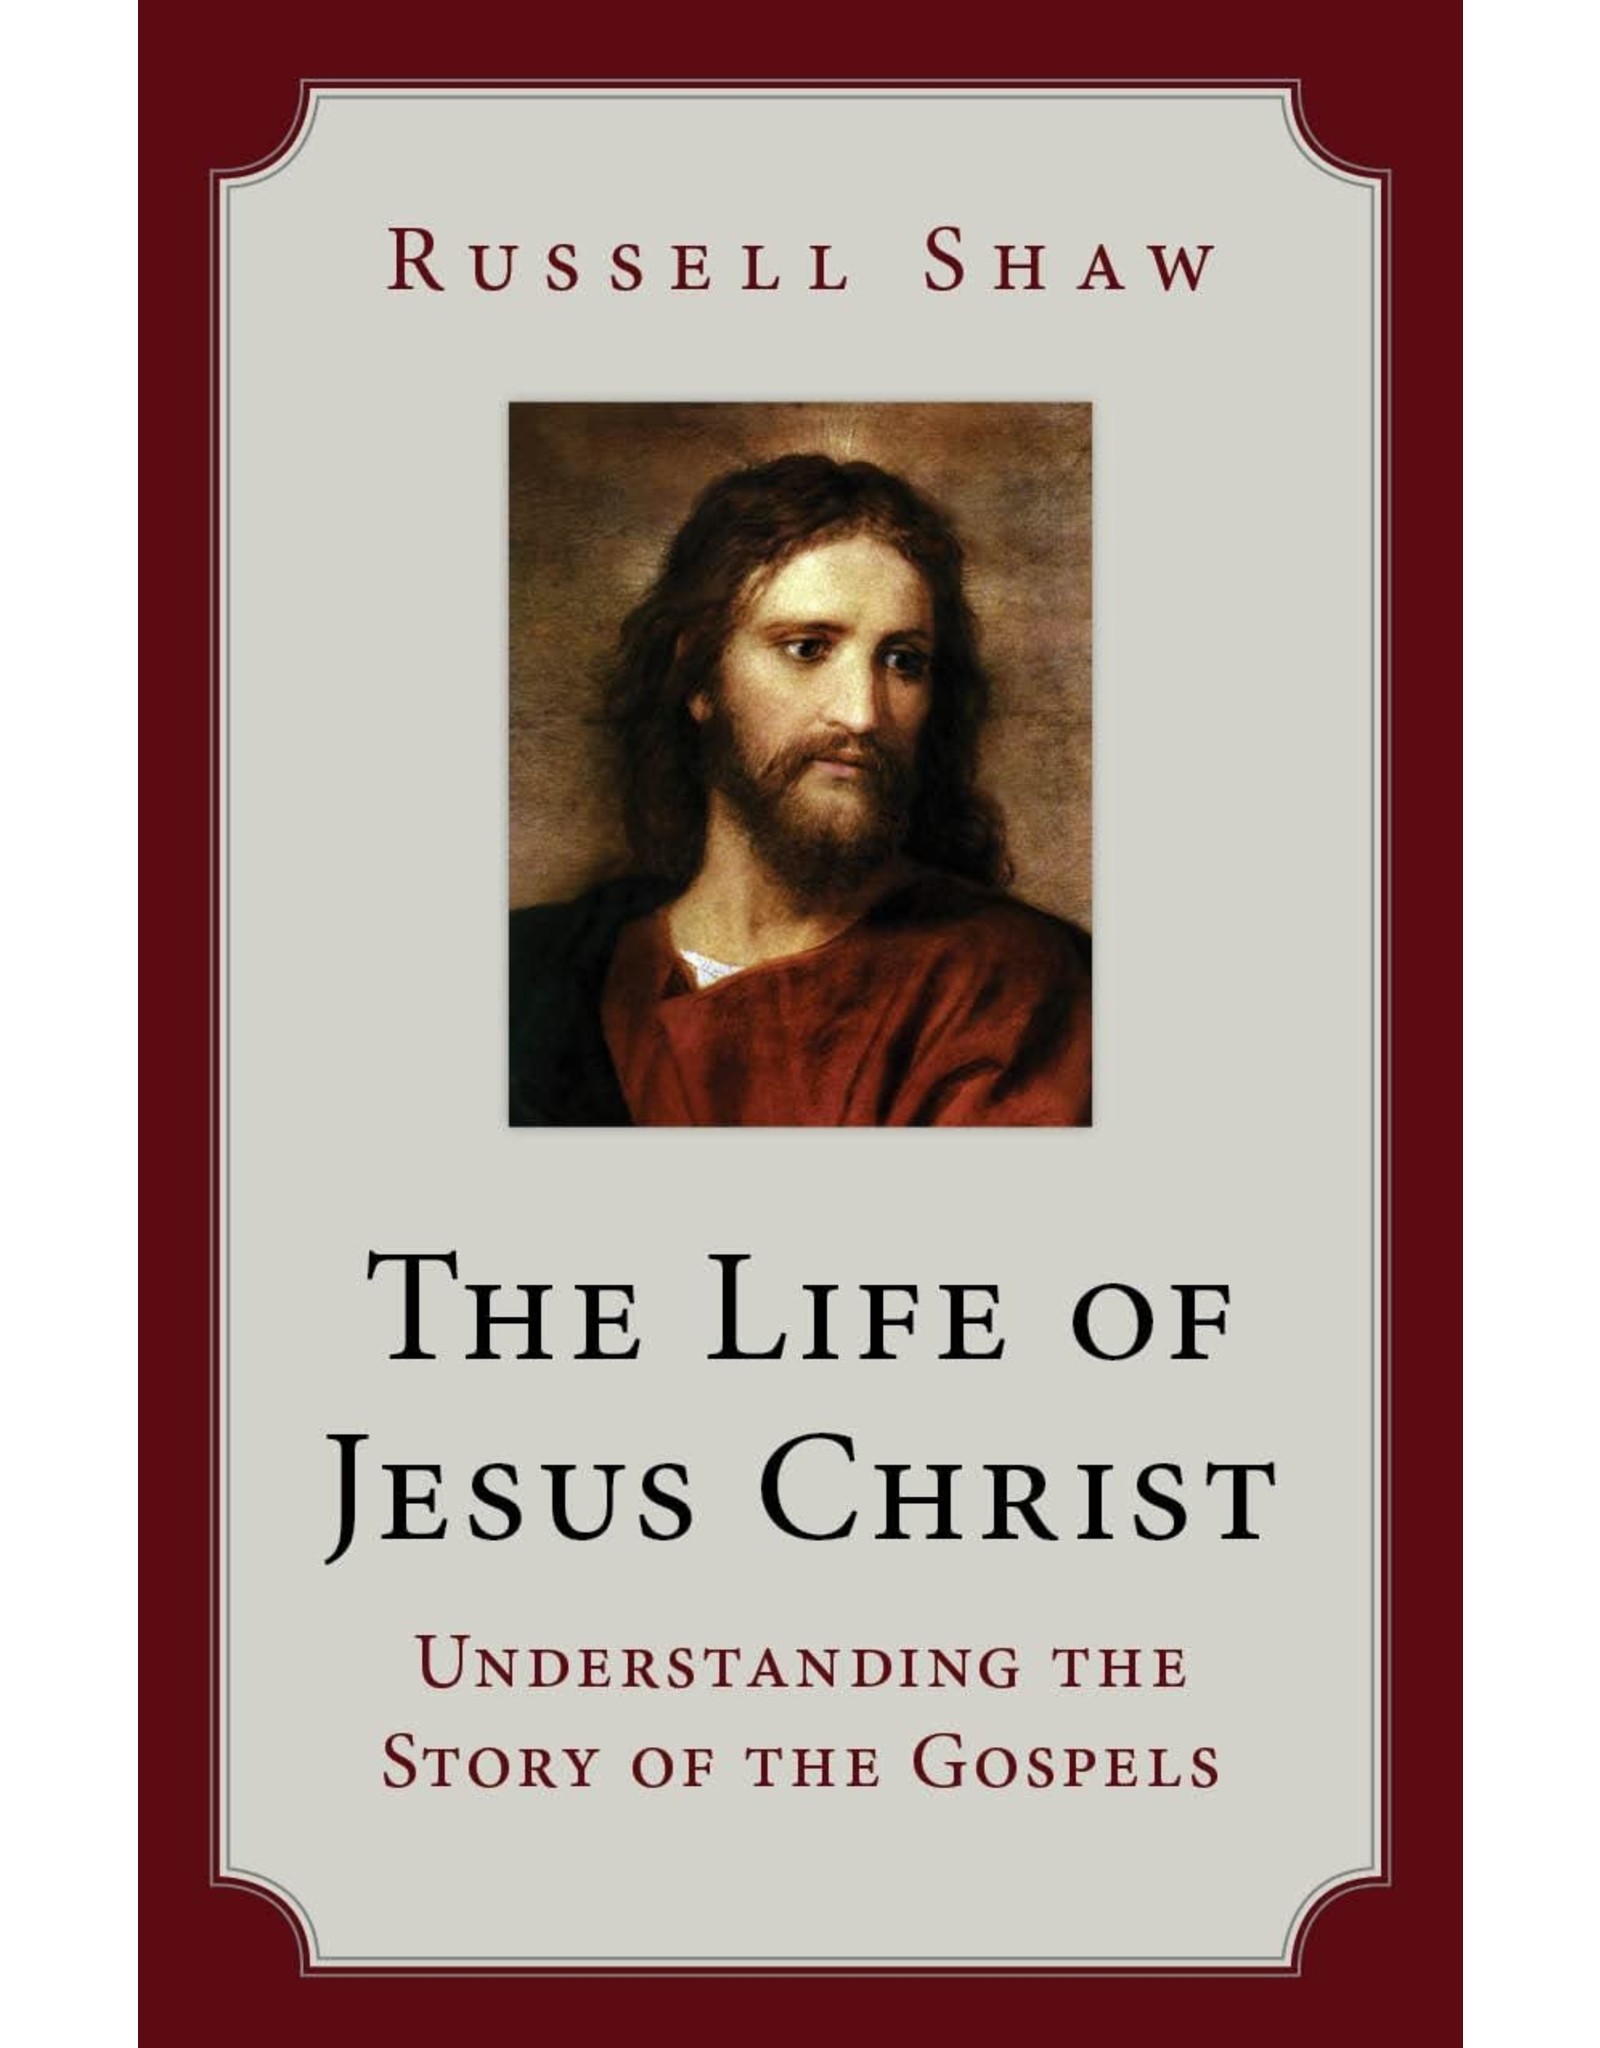 The Life of Jesus Christ: Understanding the Story of the Gospels